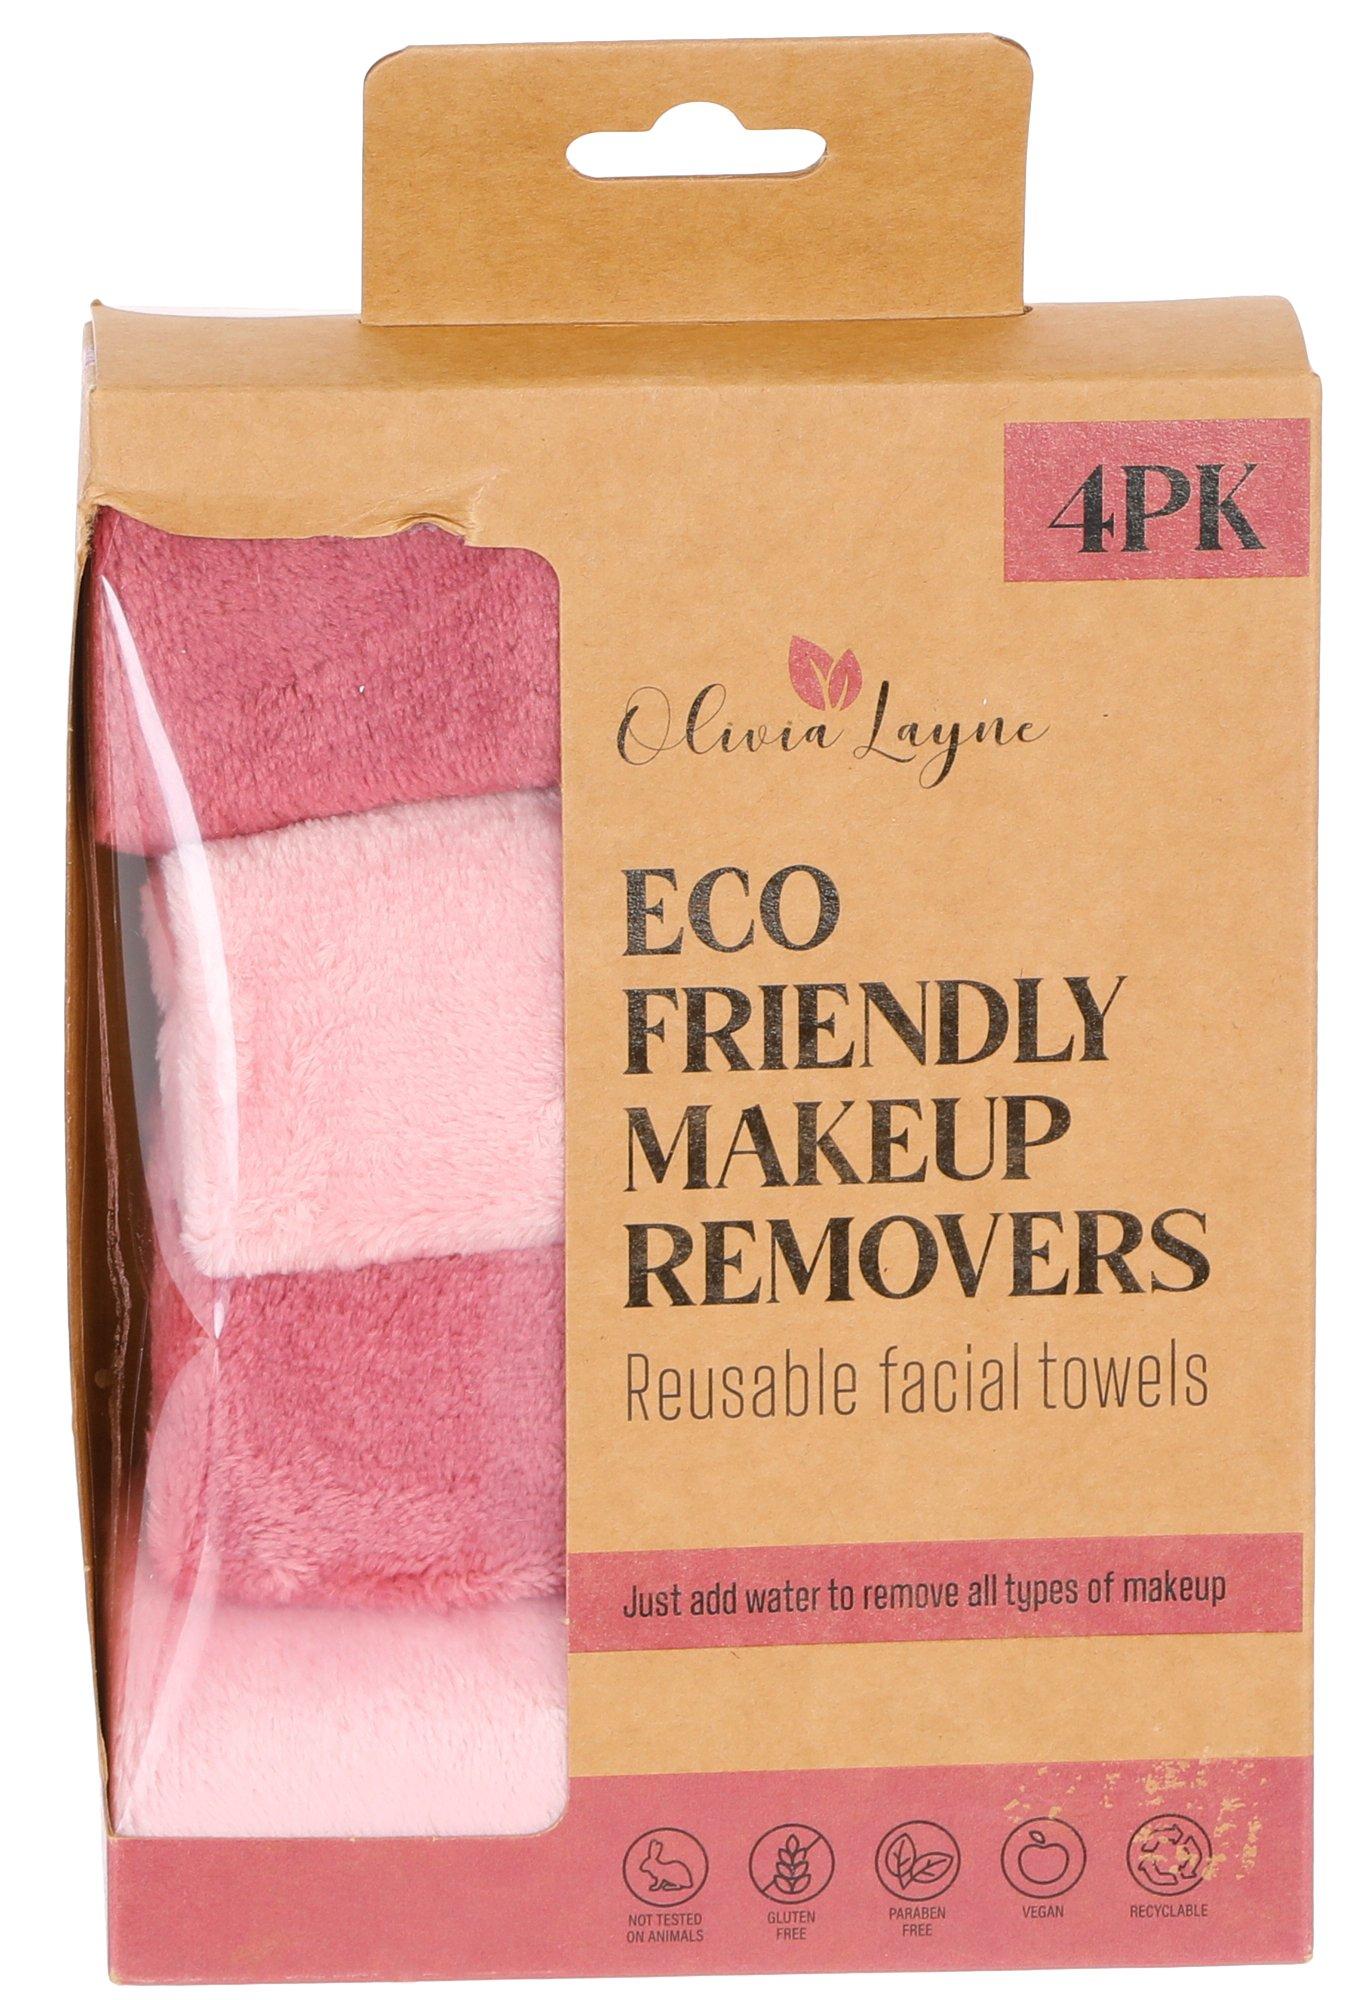 4 Pk Eco Friendly Makeup Removers